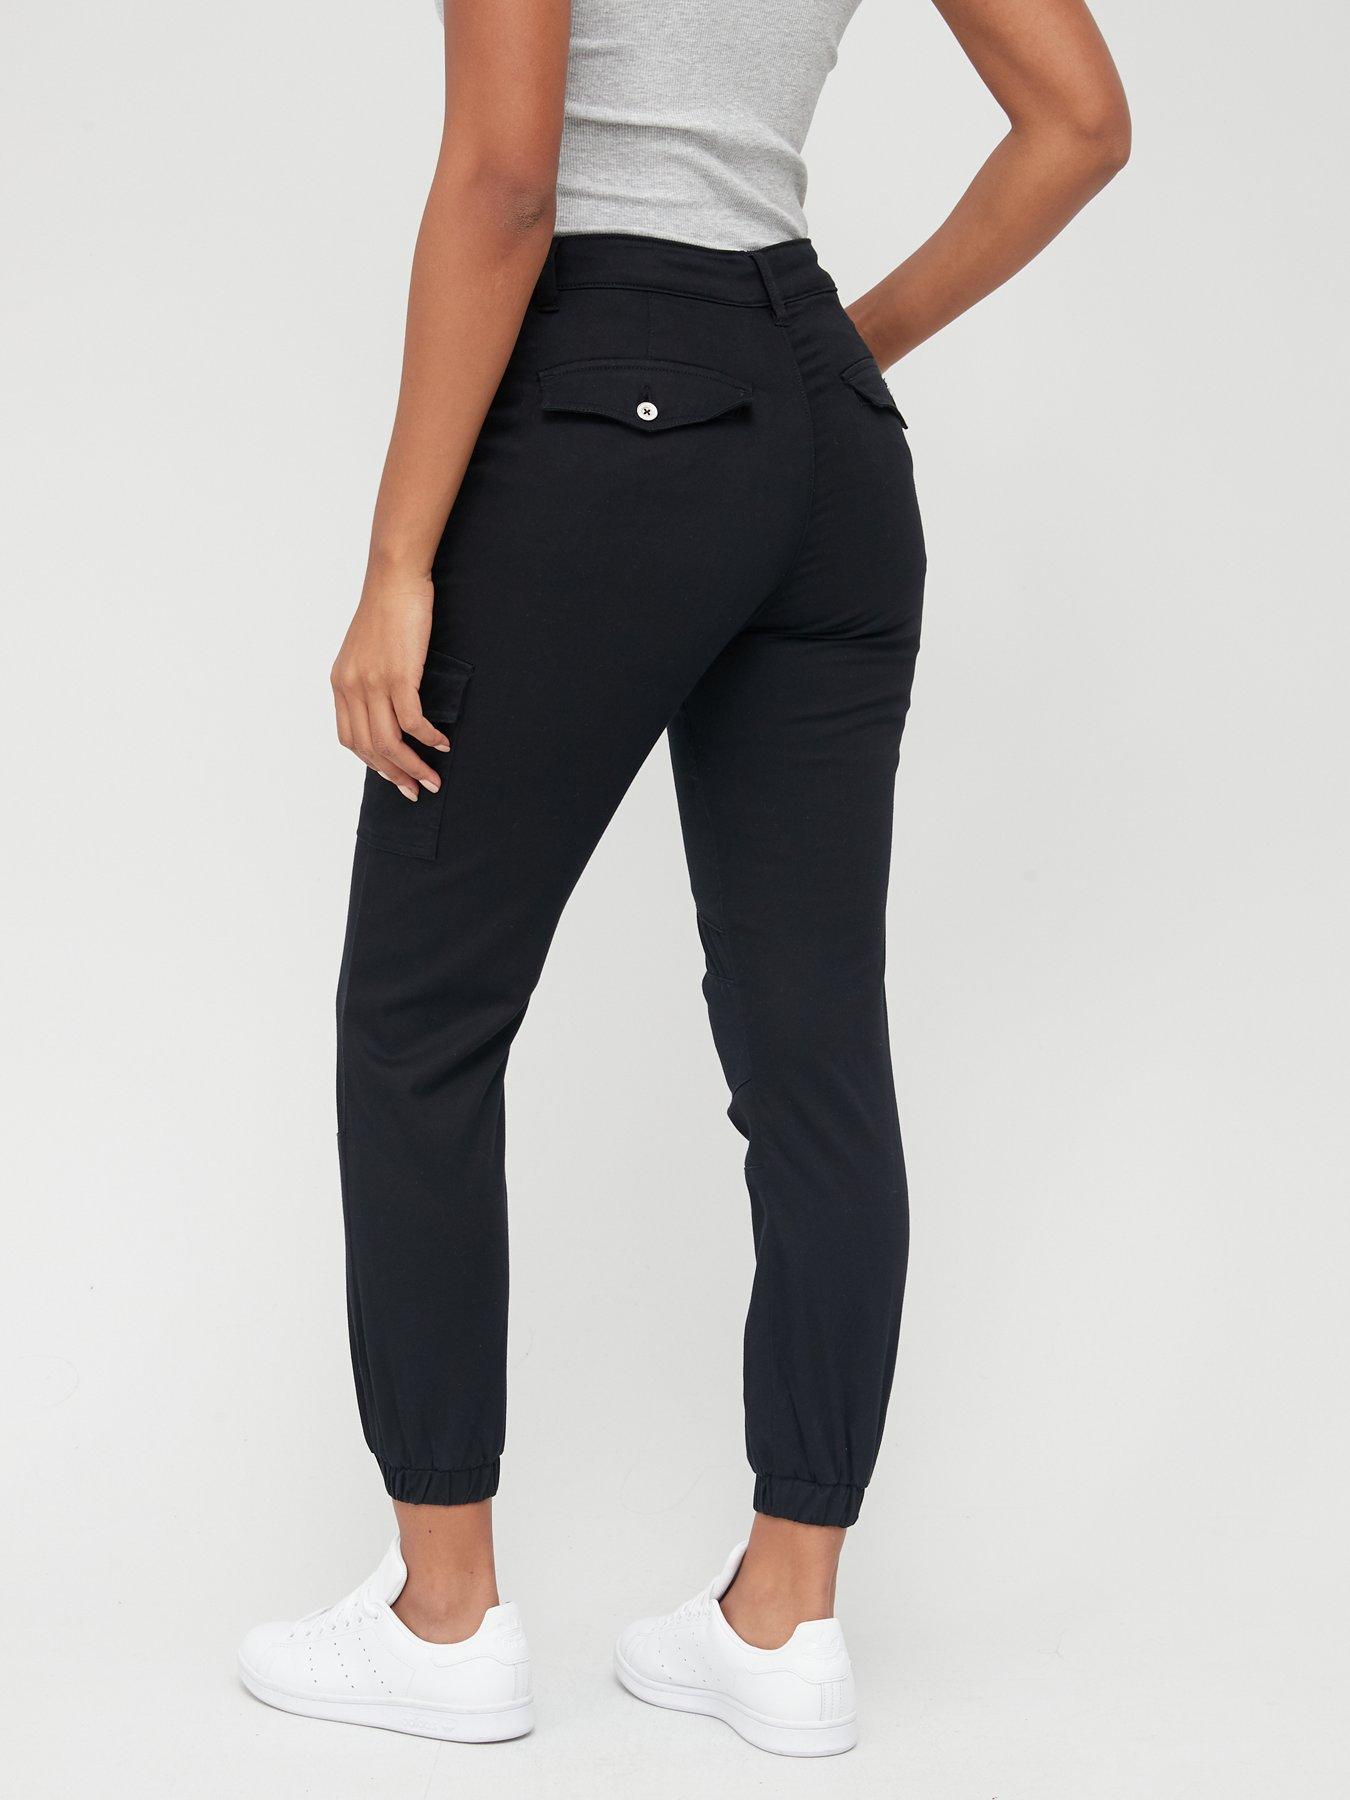 ALWAYS Women's Super Soft Casual Cargo Jogger Pants Black XL